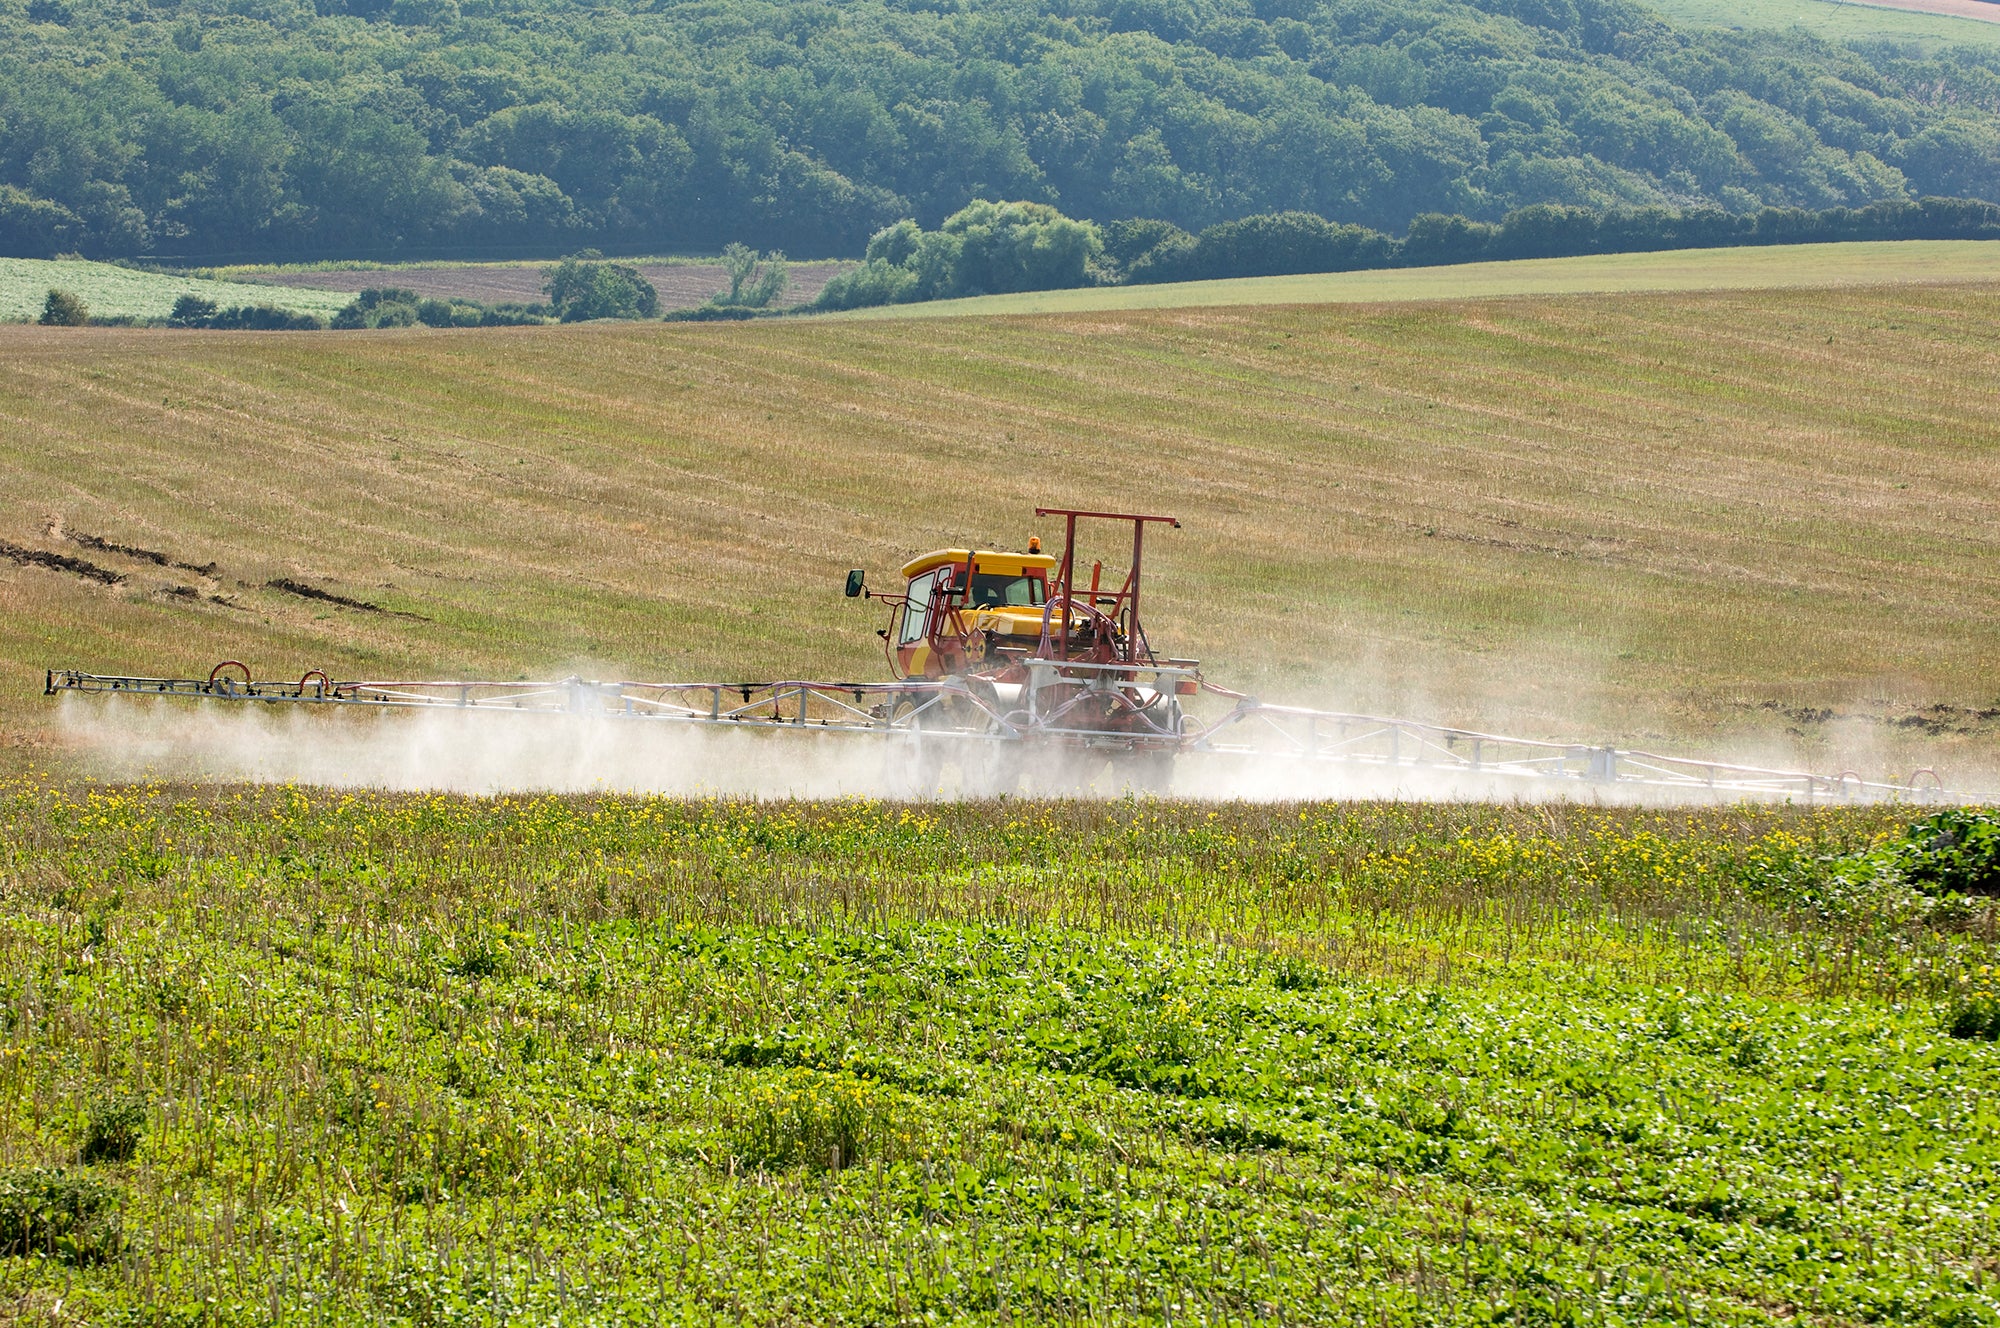 Tractor with spray rig spraying fertilizer onto field